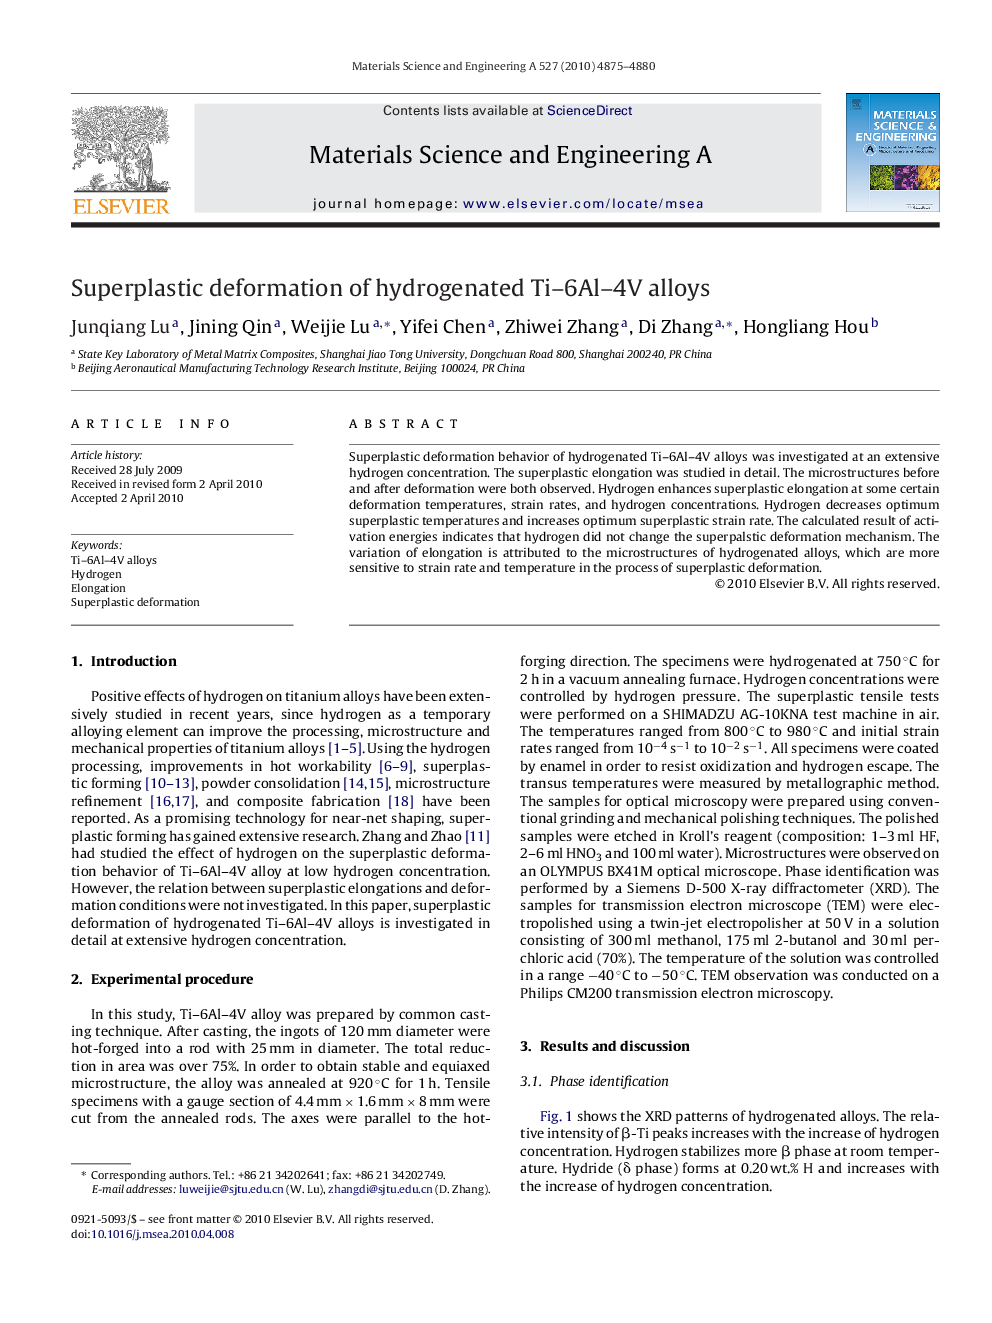 Superplastic deformation of hydrogenated Ti–6Al–4V alloys